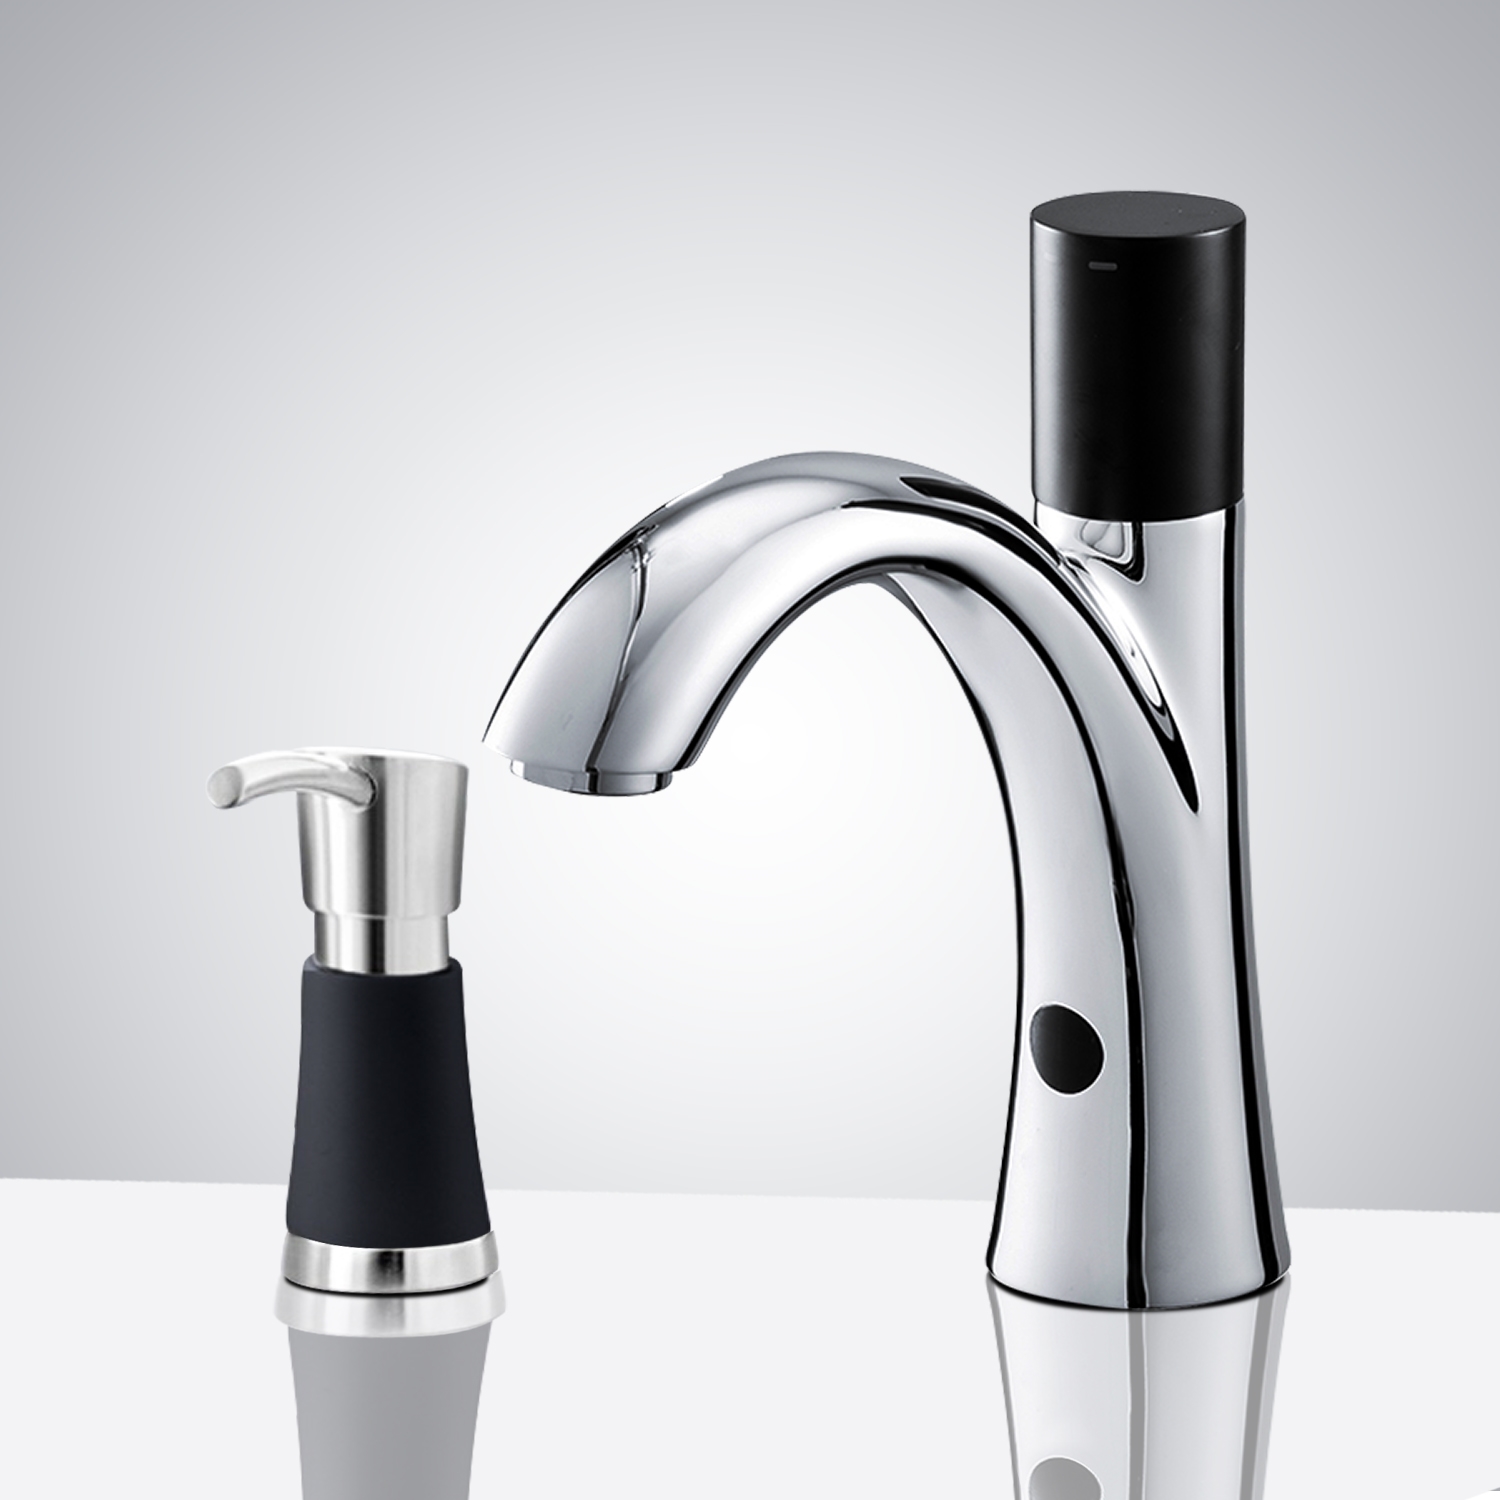 Fontana Carpi High Quality Commercial Motion Sensor Faucet & Manual Soap Dispenser for Restrooms